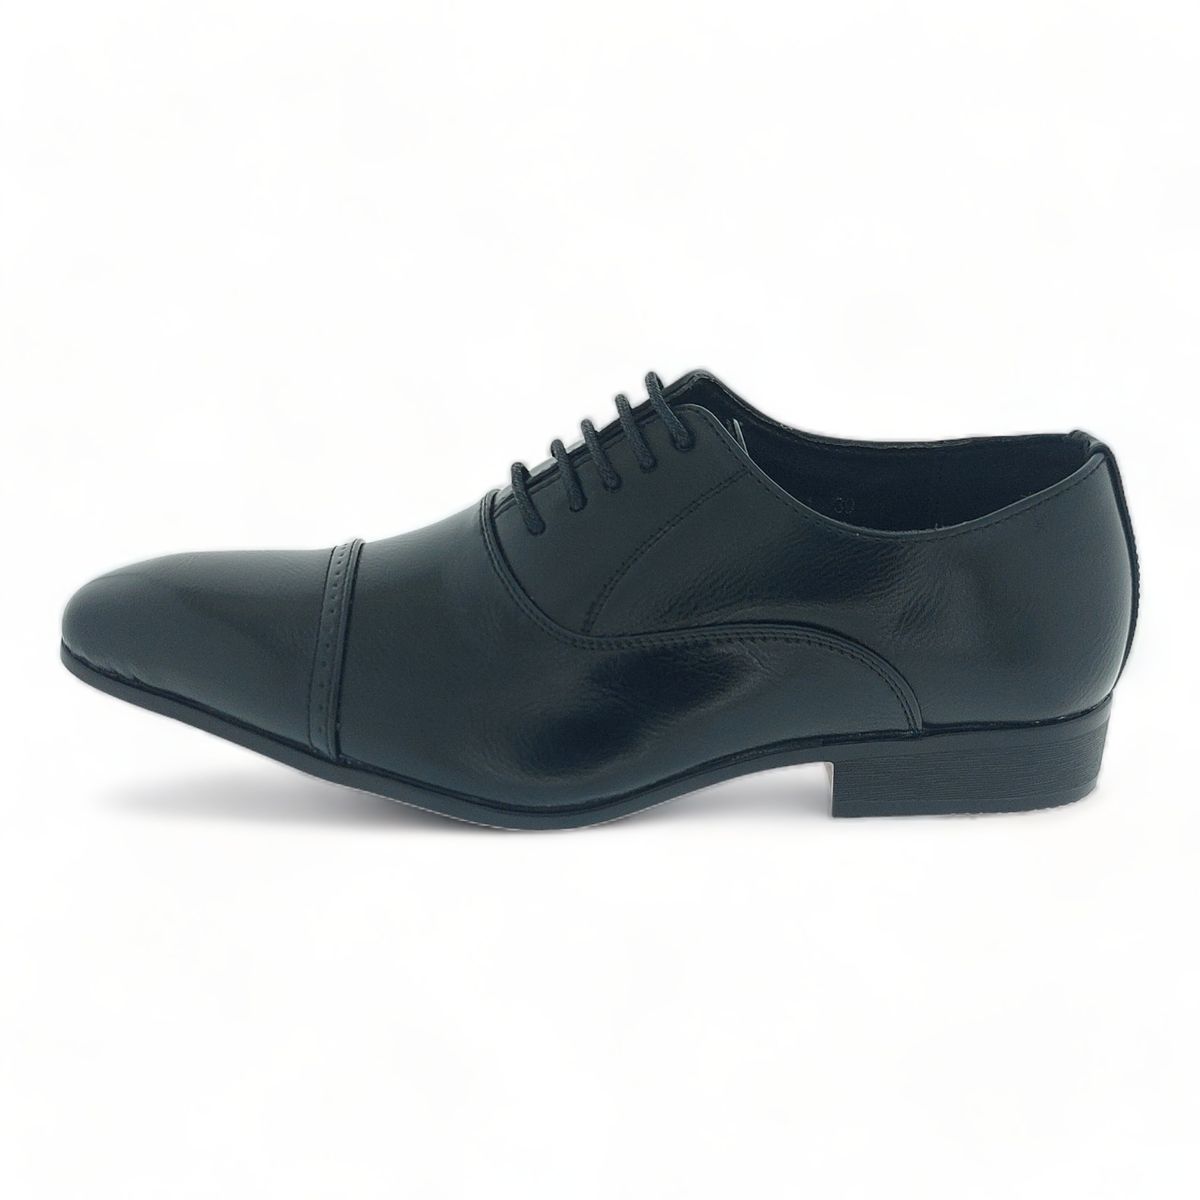 Men's Classic Dress Shoes Lace Up Oxford Y859 | Shop Today. Get it ...